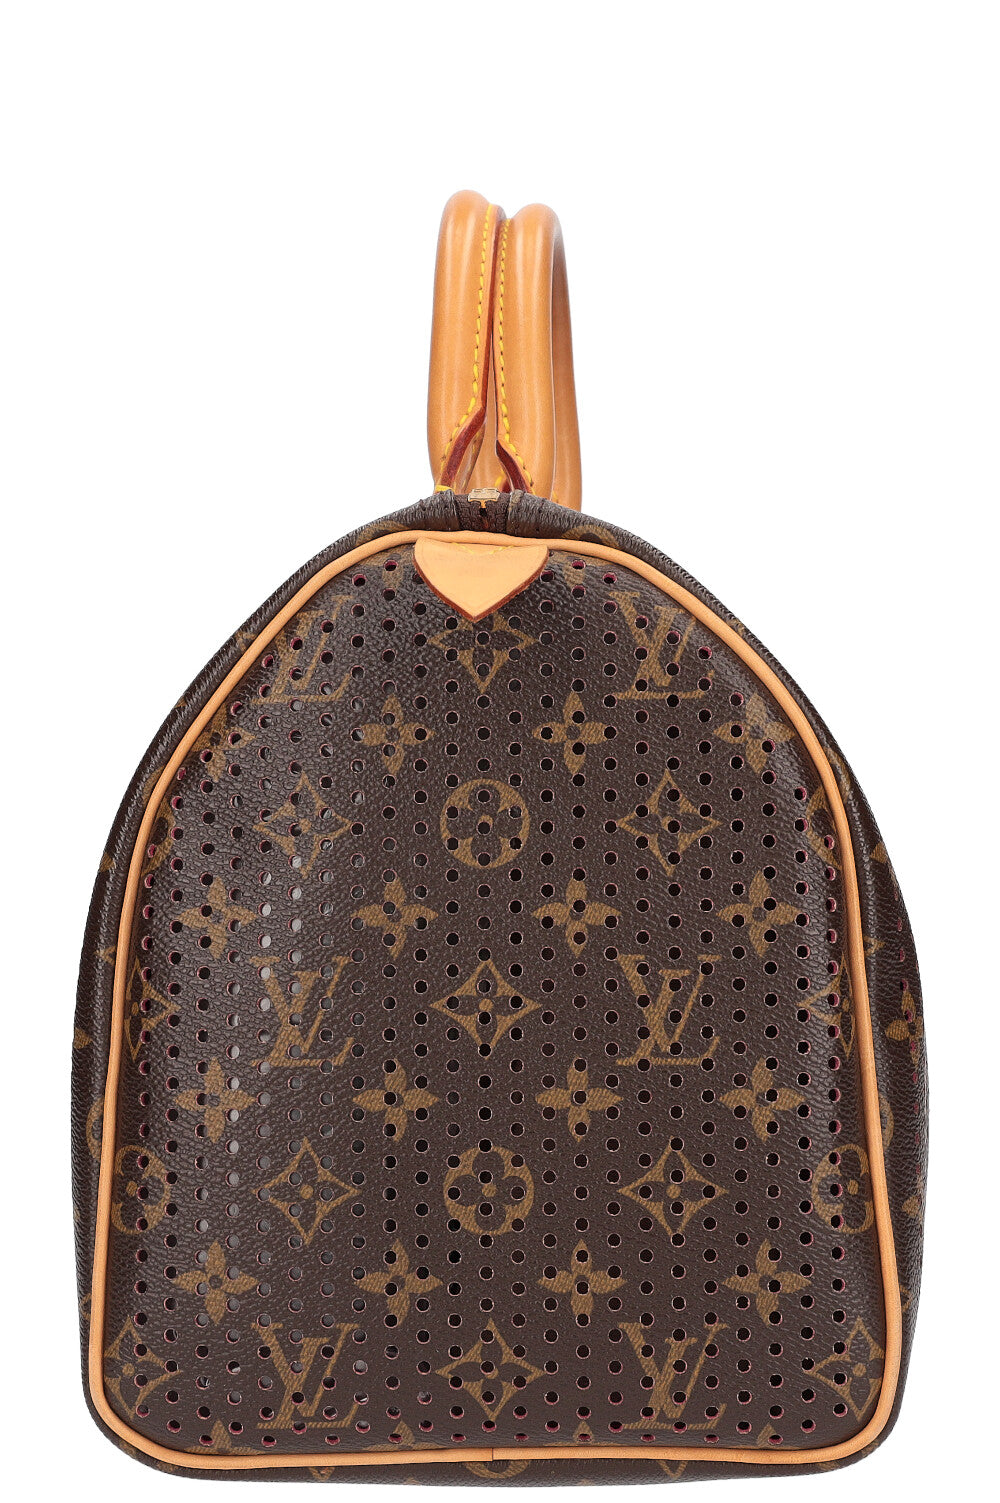 Pre-loved Louis Vuitton Speedy 30 Review – Handbags & Zig Zags